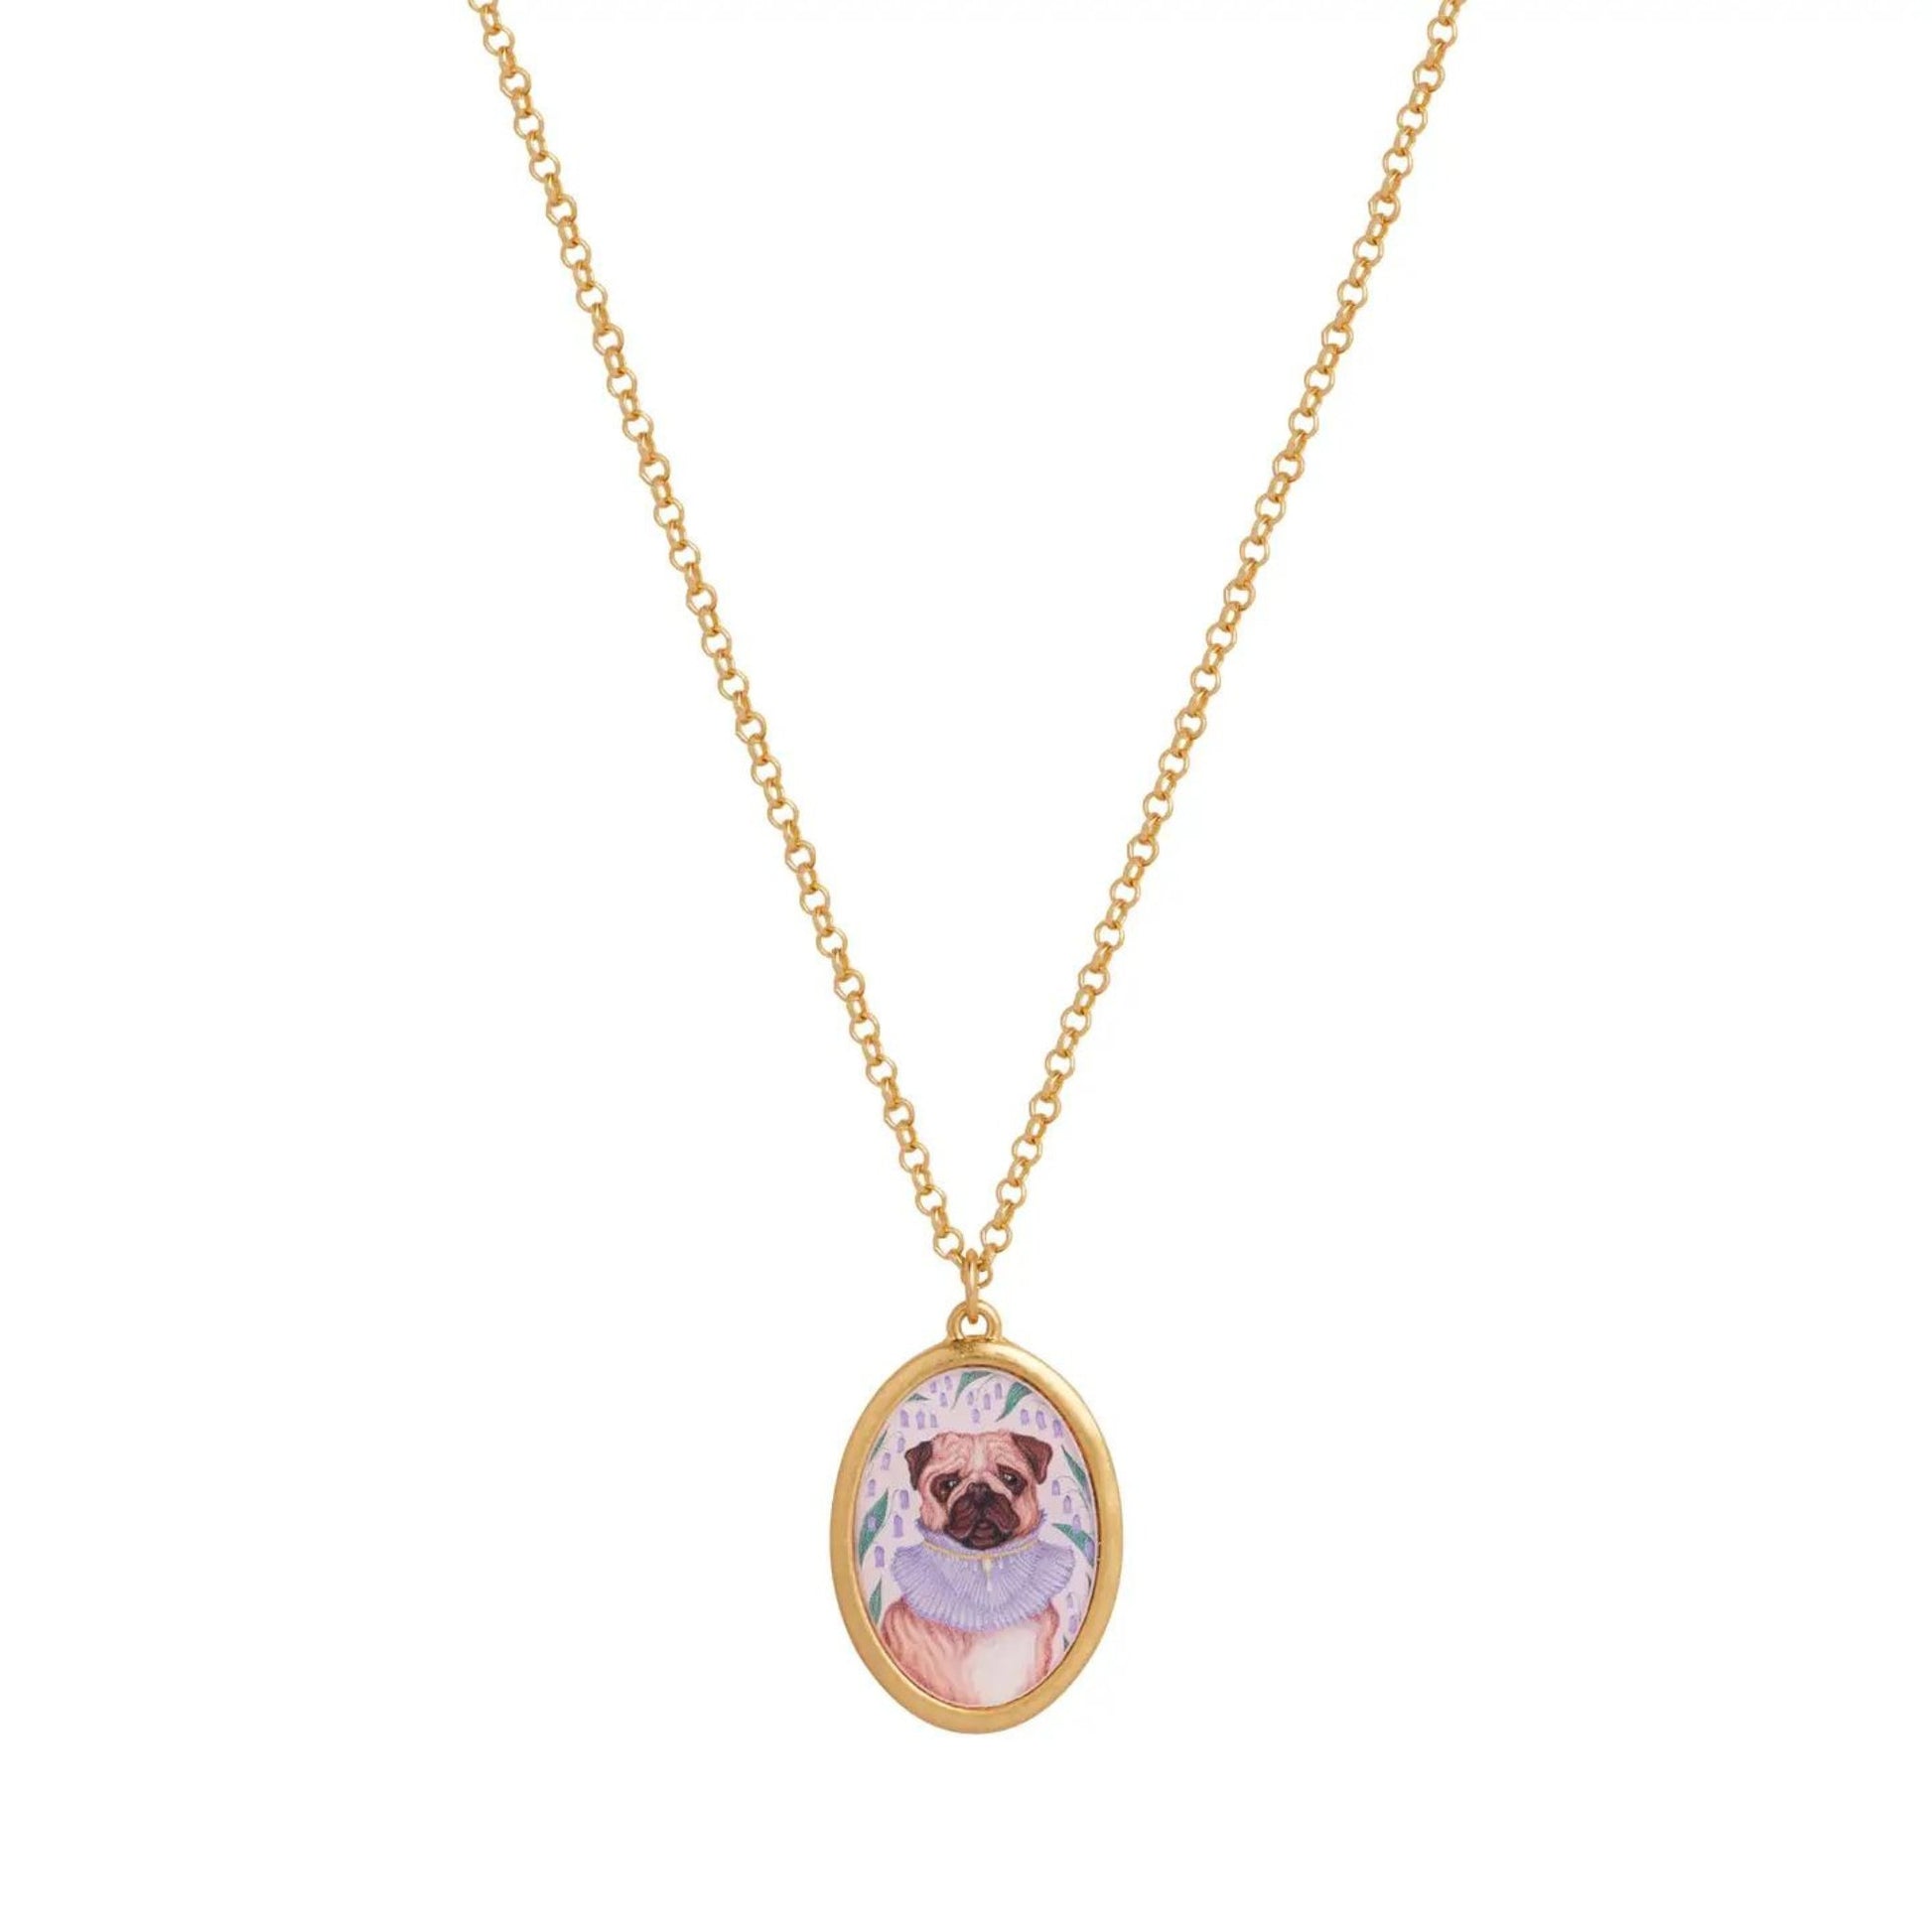 FABLE Catherine Rowe Pet Portraits - Pug Pendant Necklace - The Little Jewellery Company